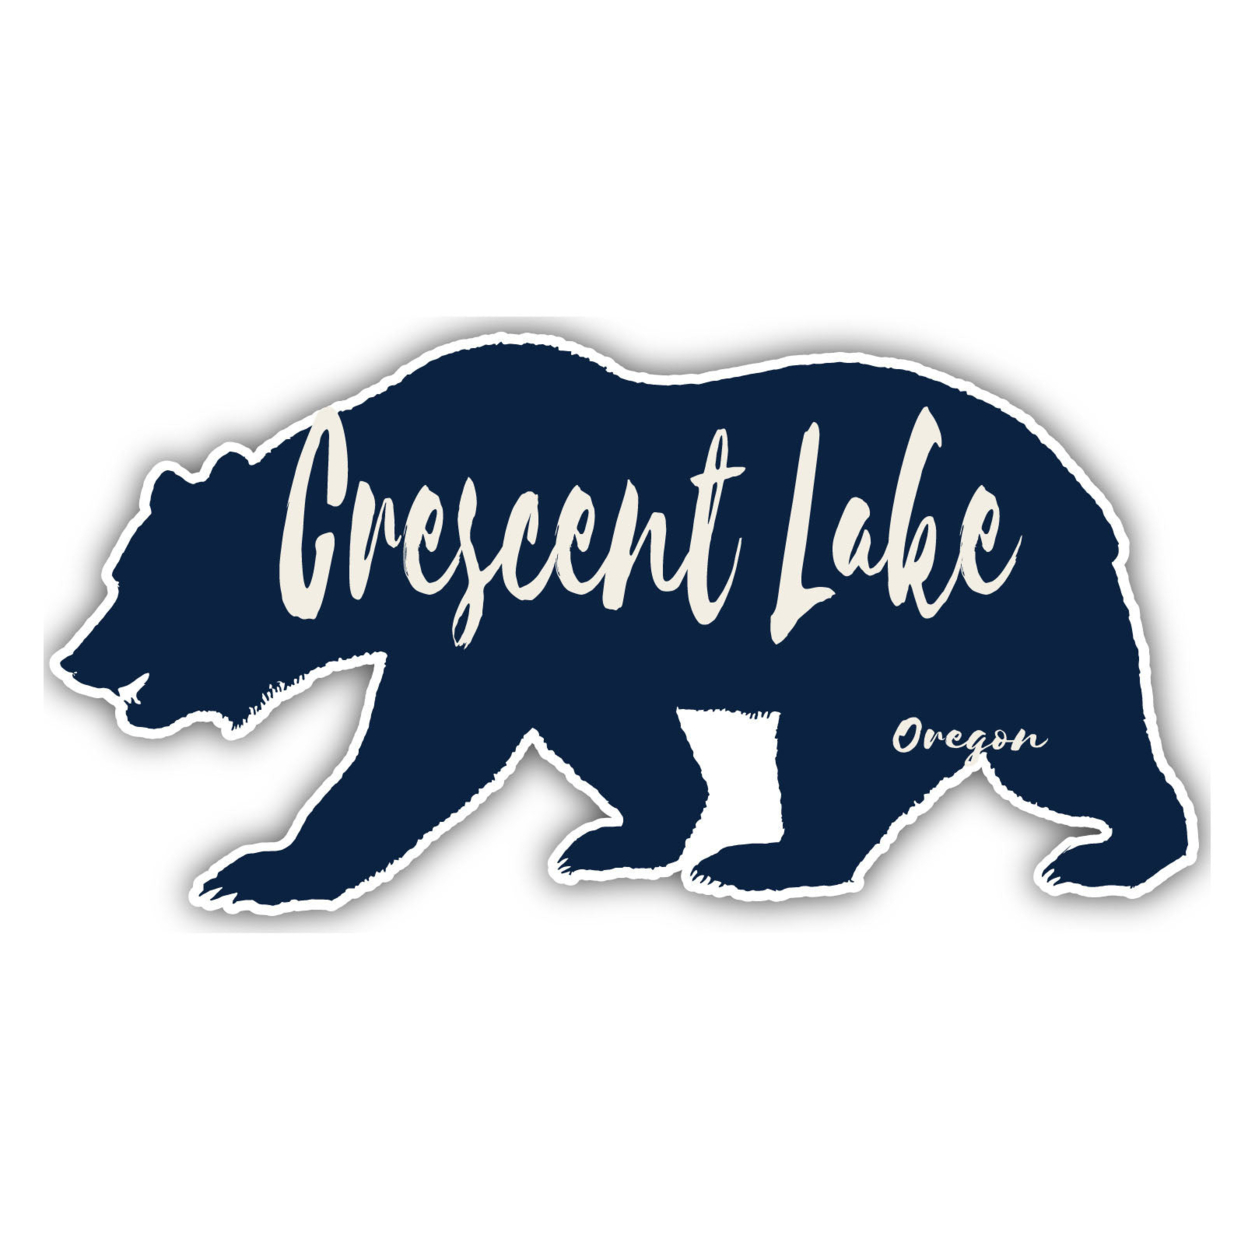 Crescent Lake Oregon Souvenir Decorative Stickers (Choose Theme And Size) - Single Unit, 4-Inch, Tent